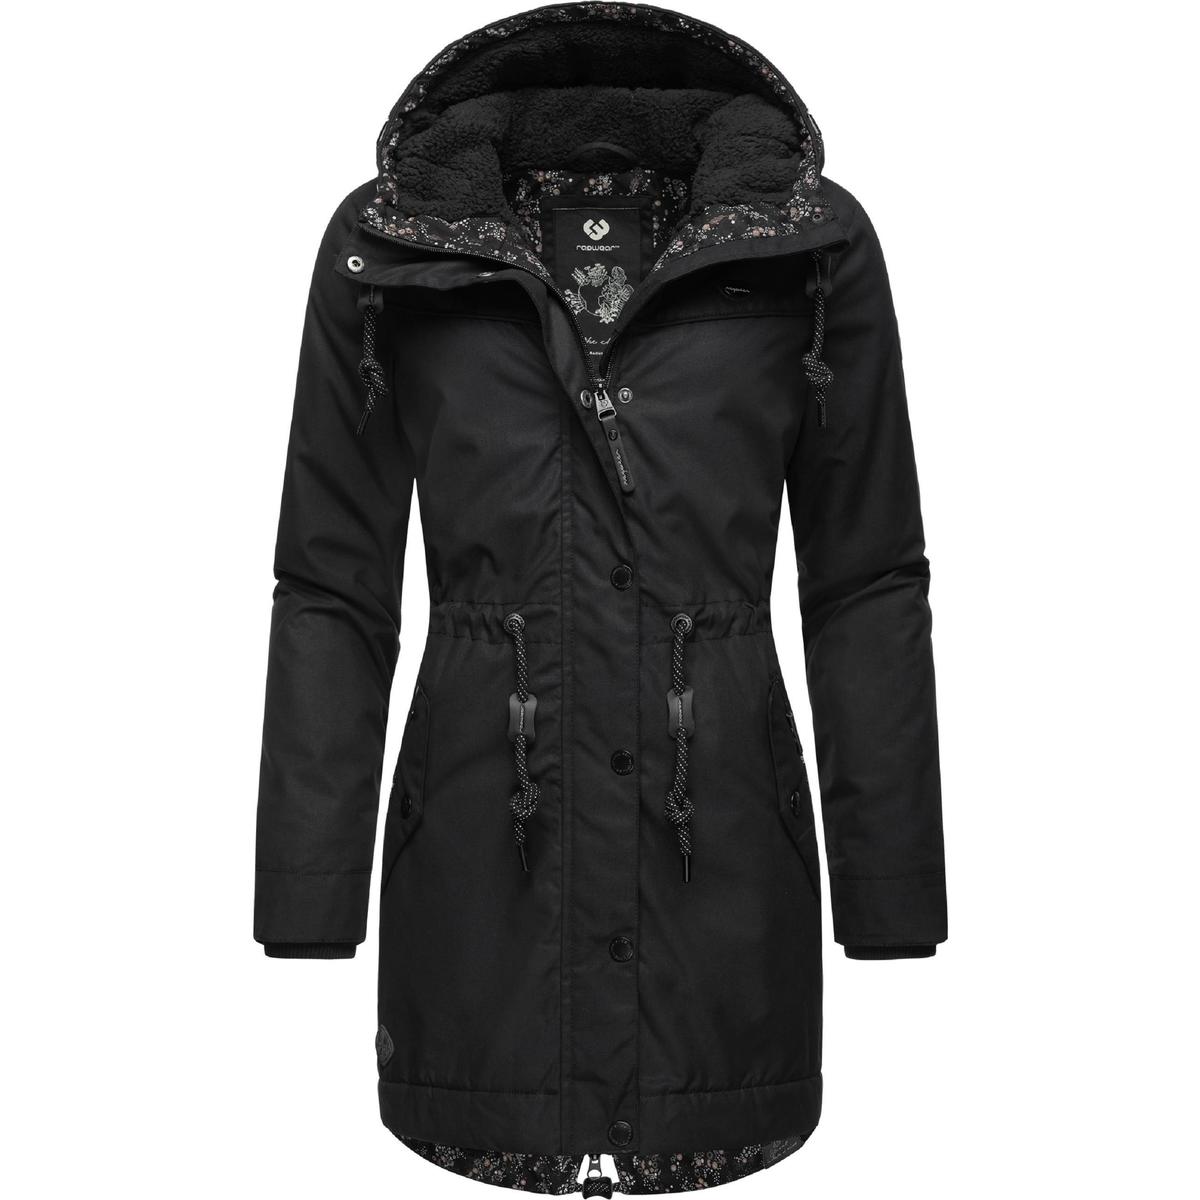 Ragwear Winterjacke YM-Canny Schwarz 159,99 - Jacken Damen € Kleidung